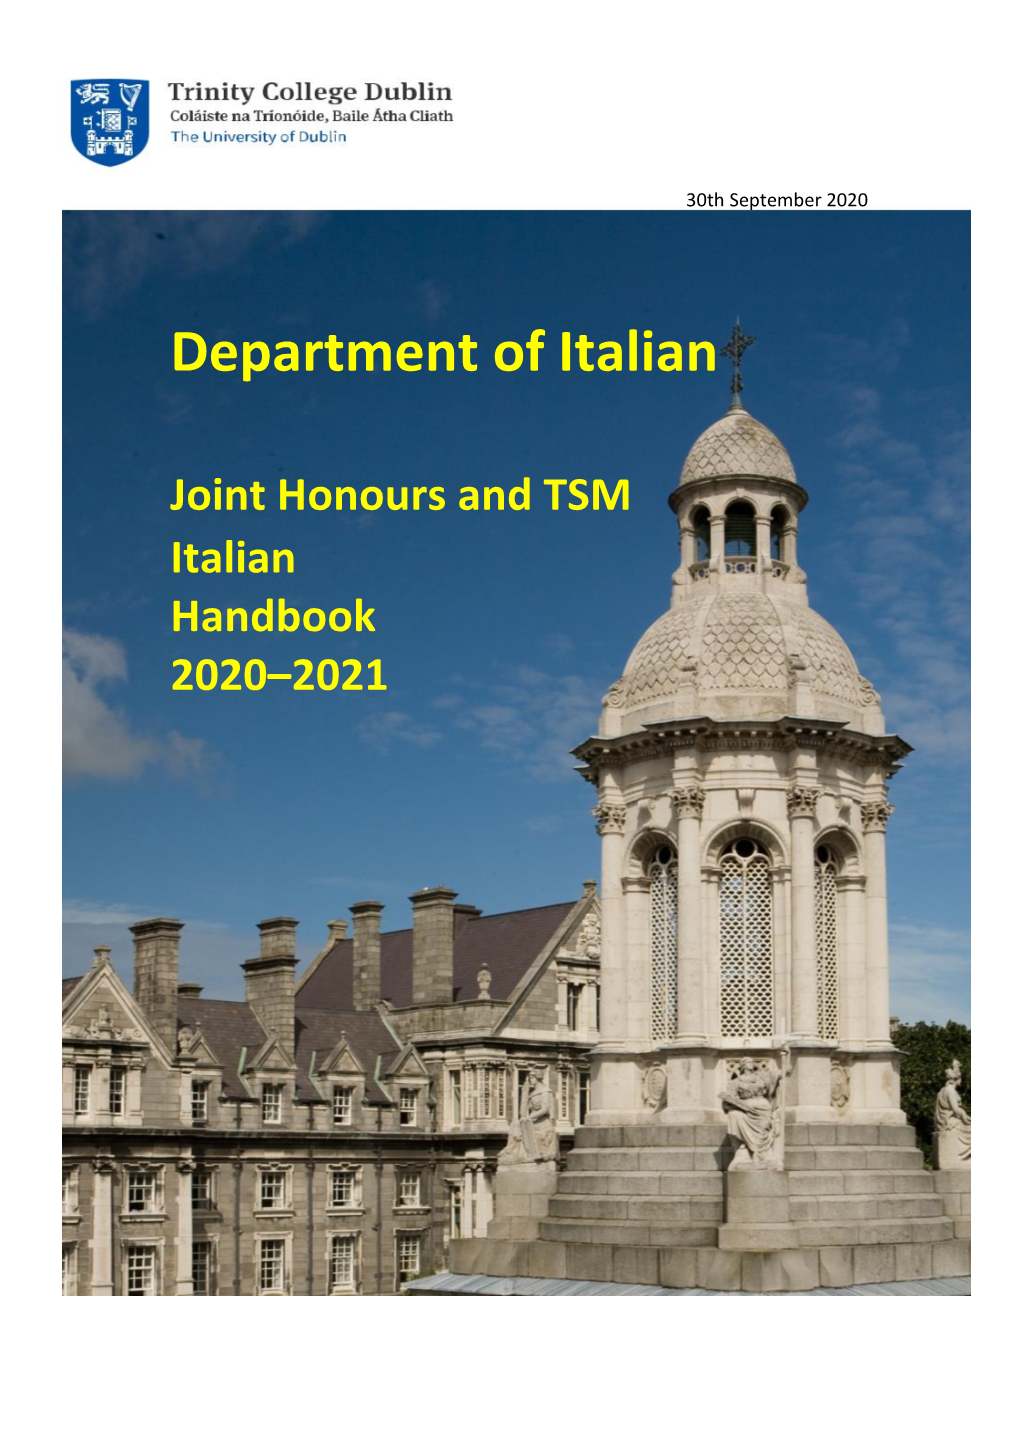 Italian Department Handbook